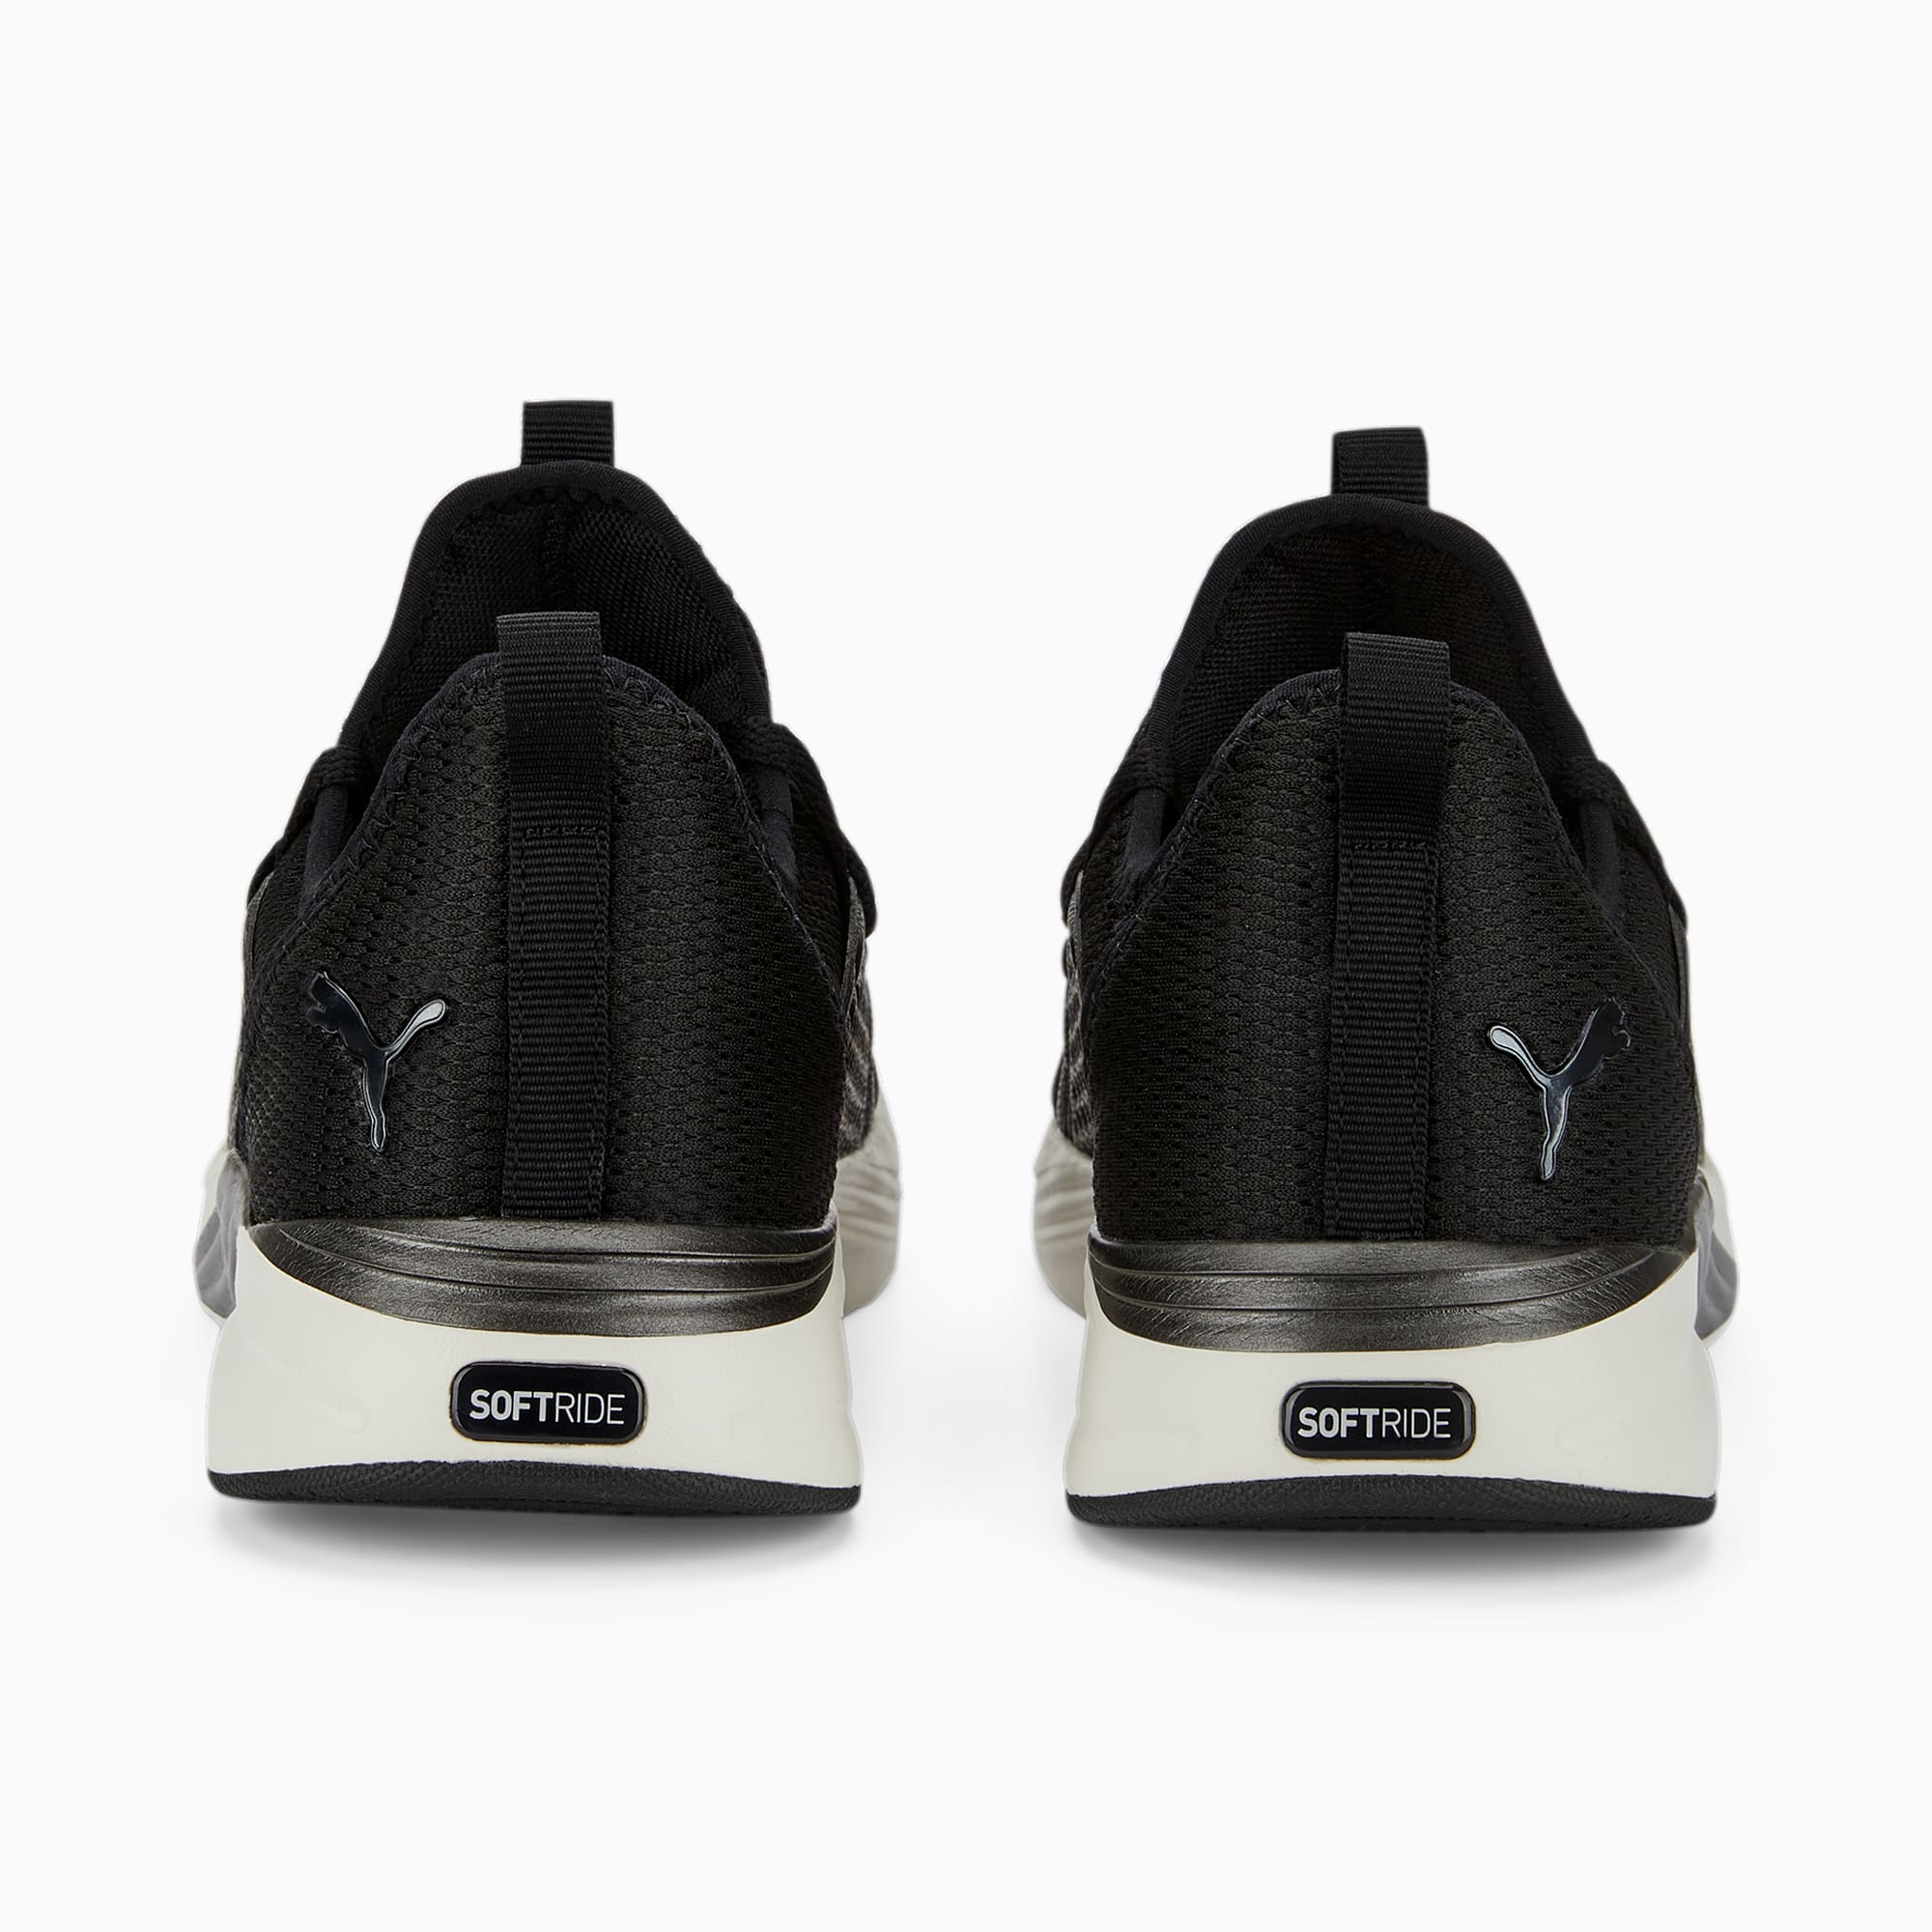 PUMA Chaussures De Running SoftrideSophia 2 Elektro Femme, Noir/Blanc